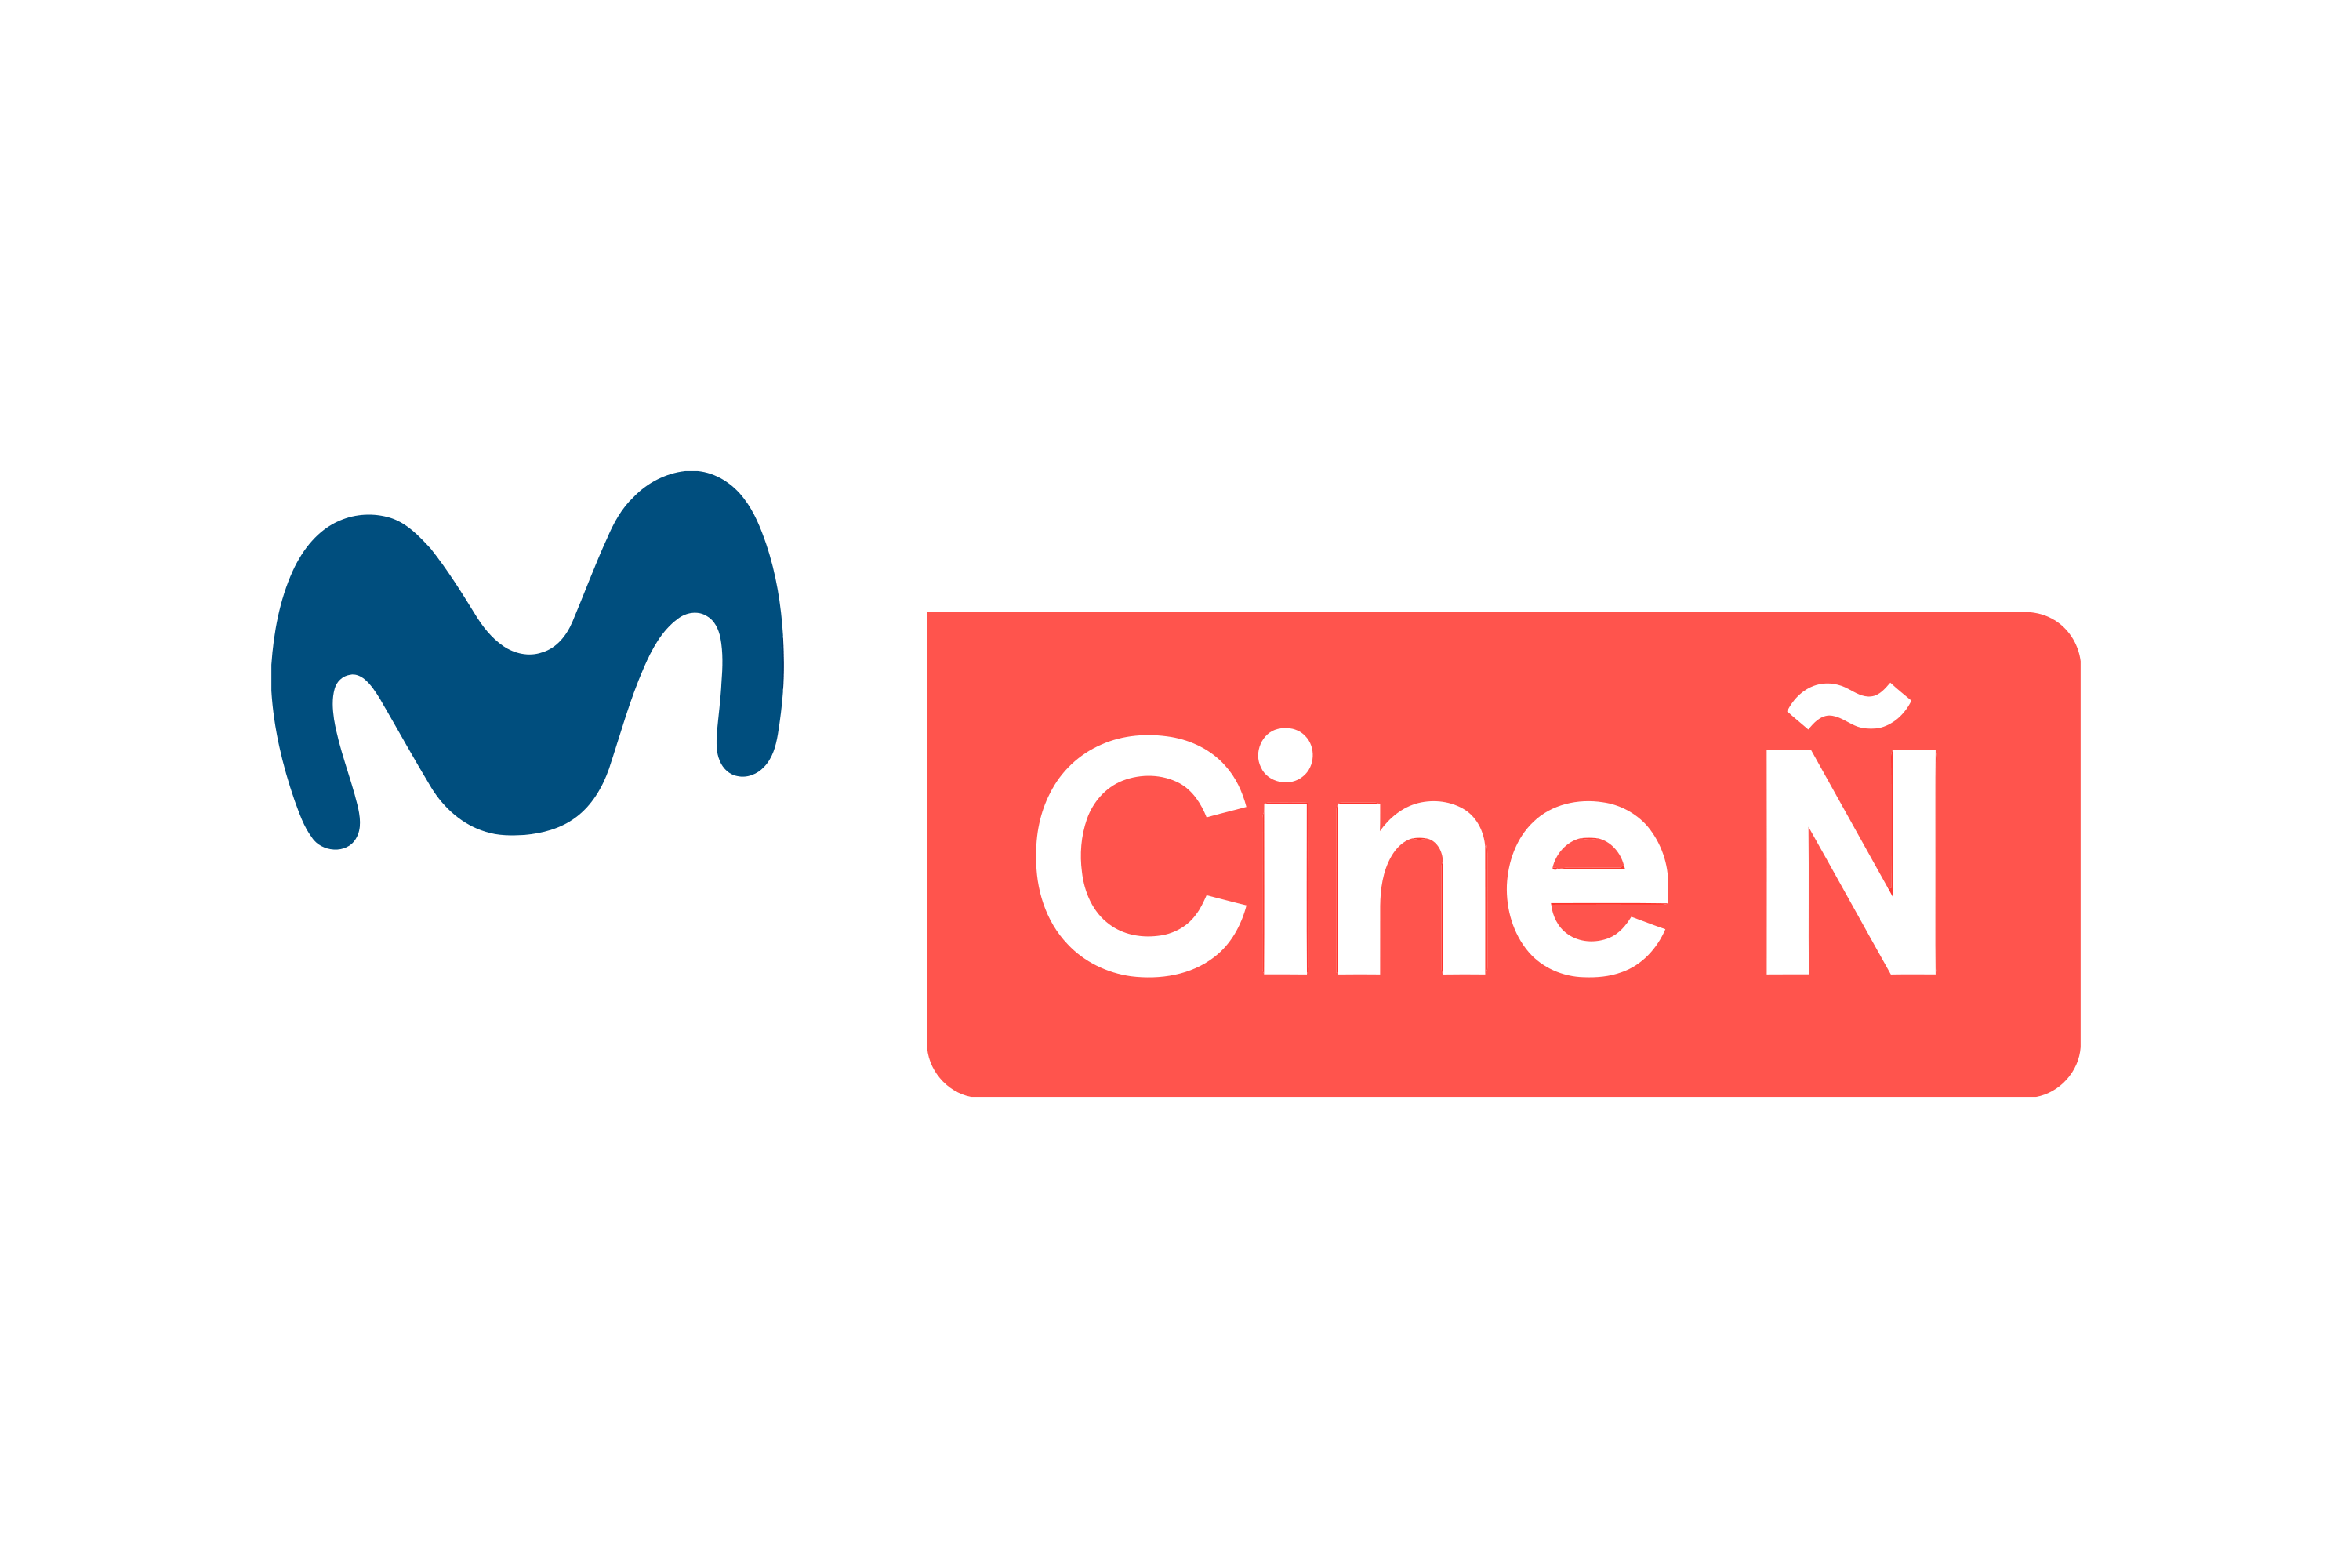 Download Movistar Cine Español Logo in SVG Vector or PNG File Format